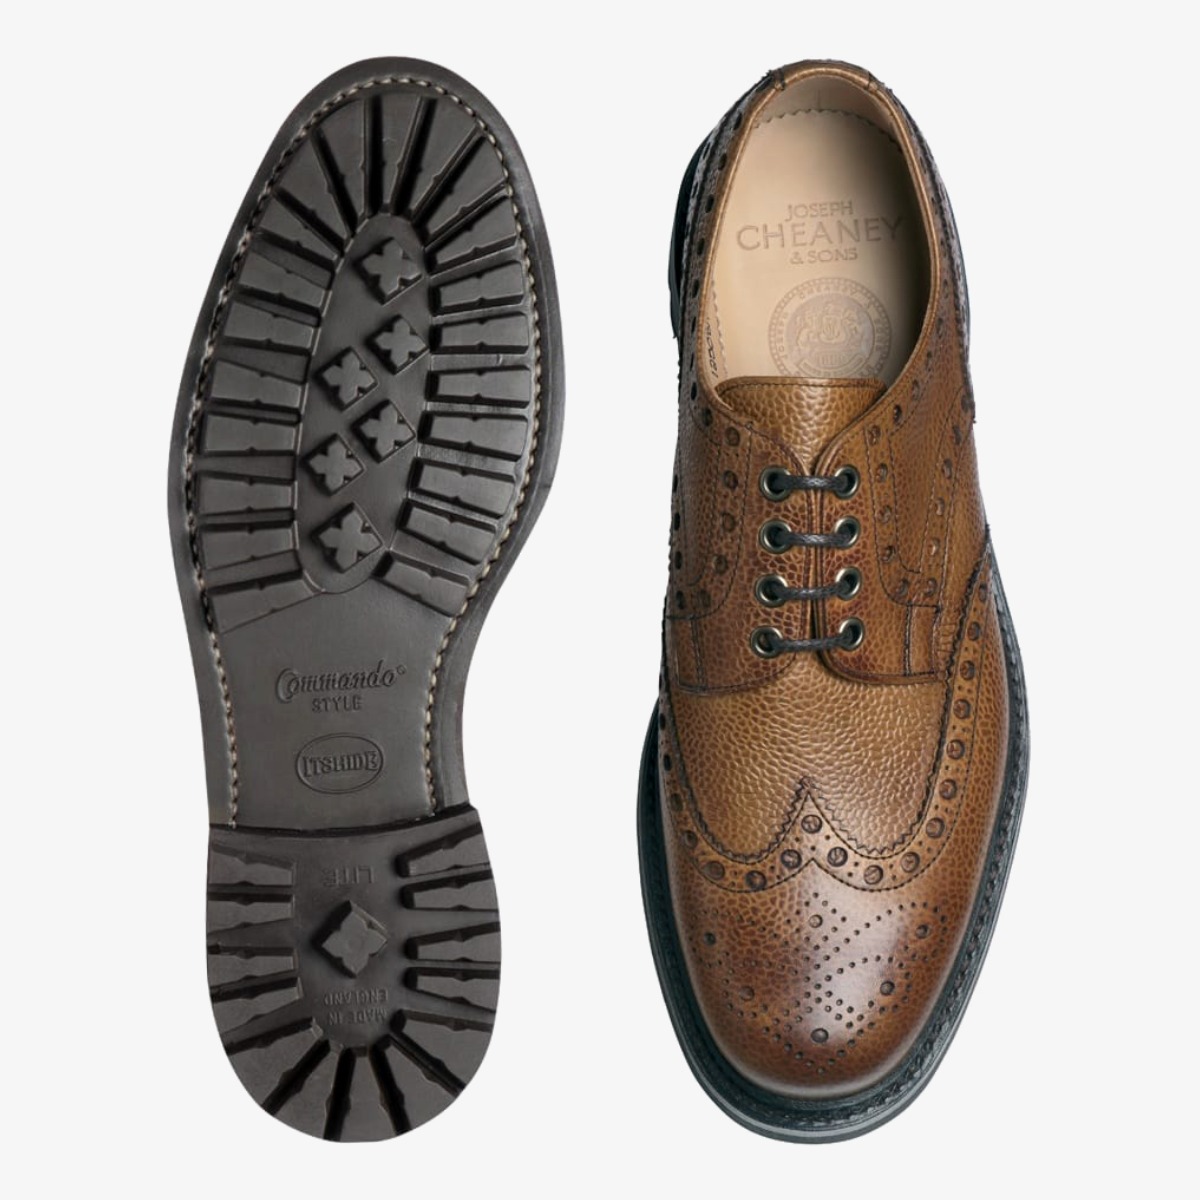 Cheaney Avon almond brogue men's derby shoes